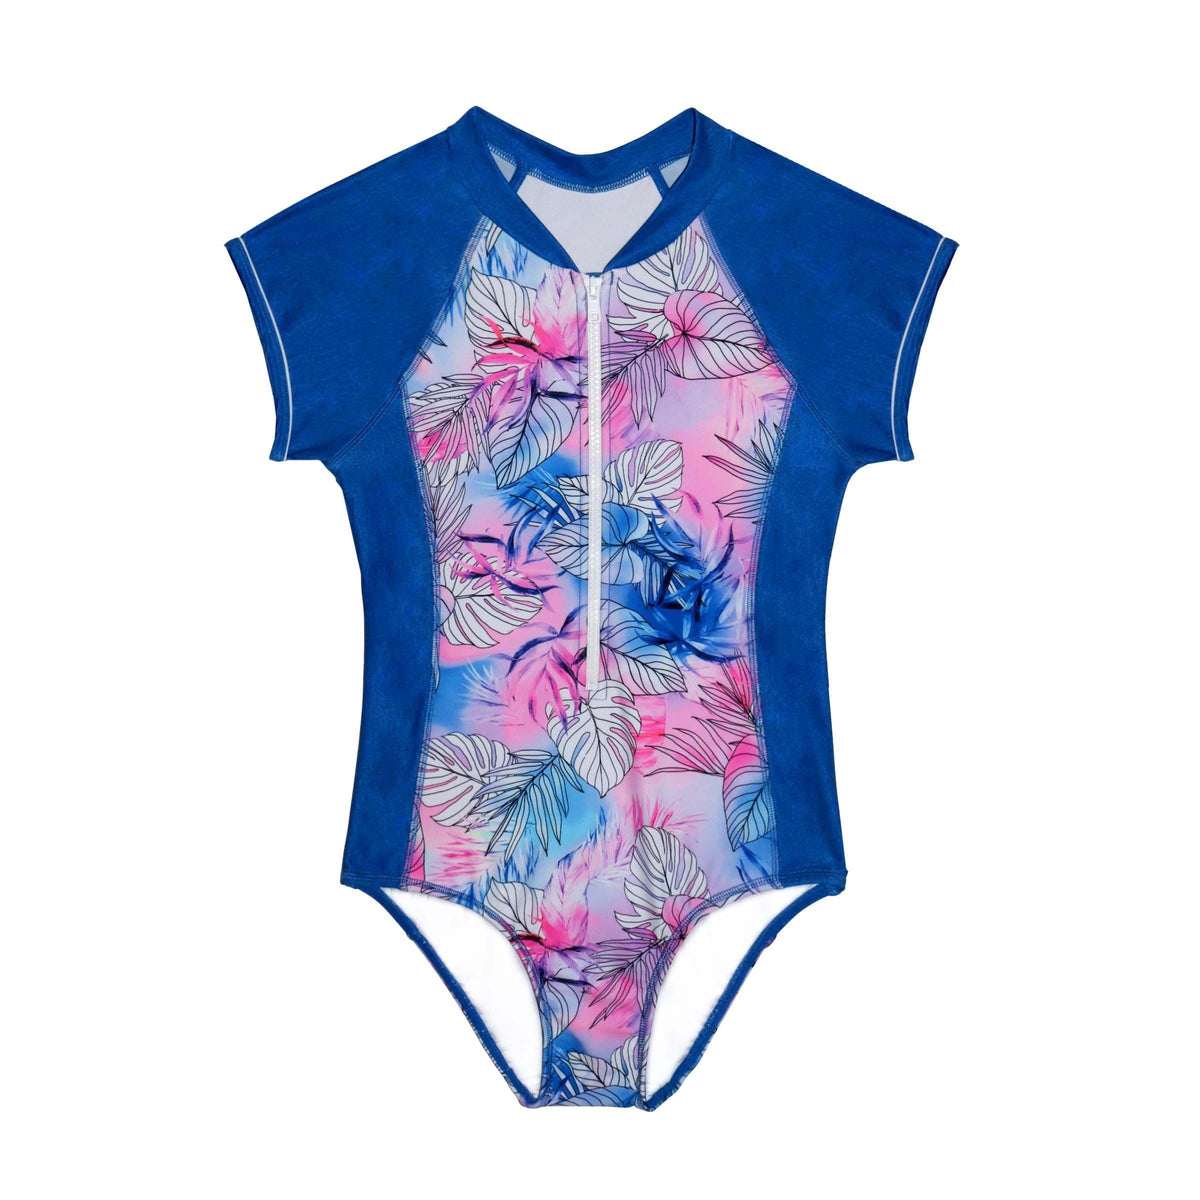 Girls Coral Coast Surfsuit - Coral Pink - Salty Ink - Splash Swimwear  - girls 8-16, Girls swimwear, Jul23, kids, salty ink - Splash Swimwear 